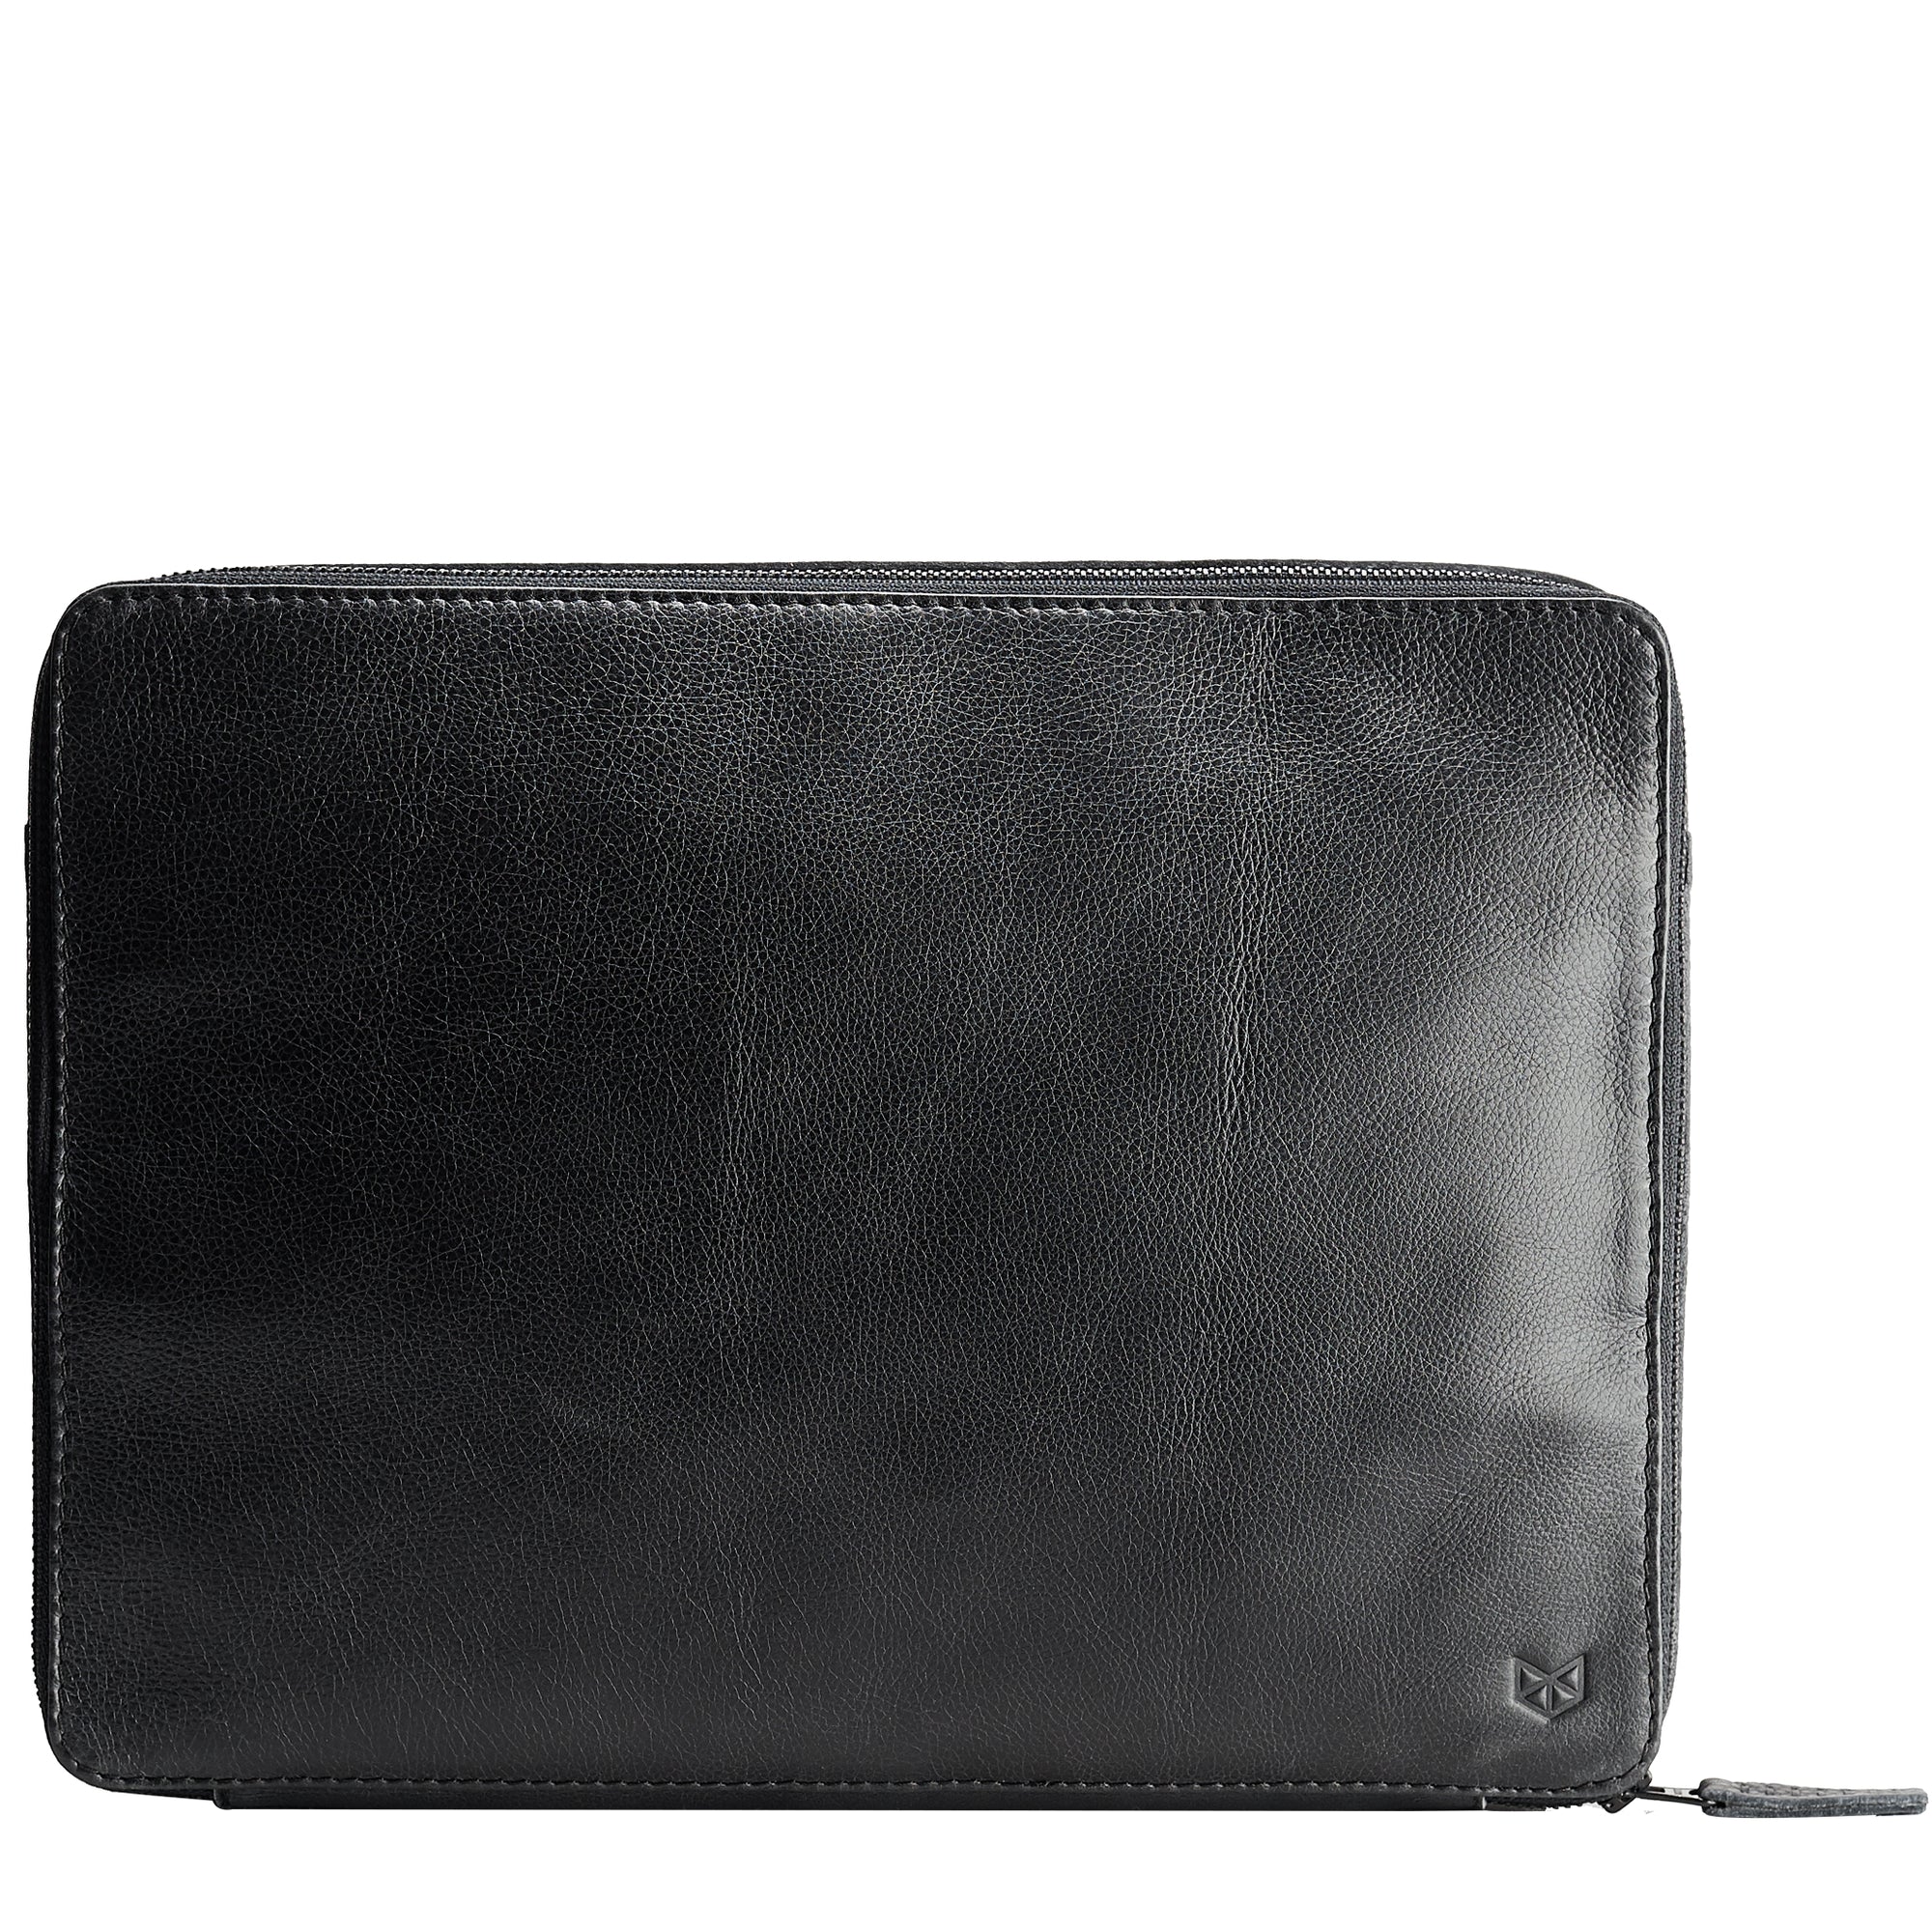 Black EDC laptop bag. Tech bags for men by Capra Leather